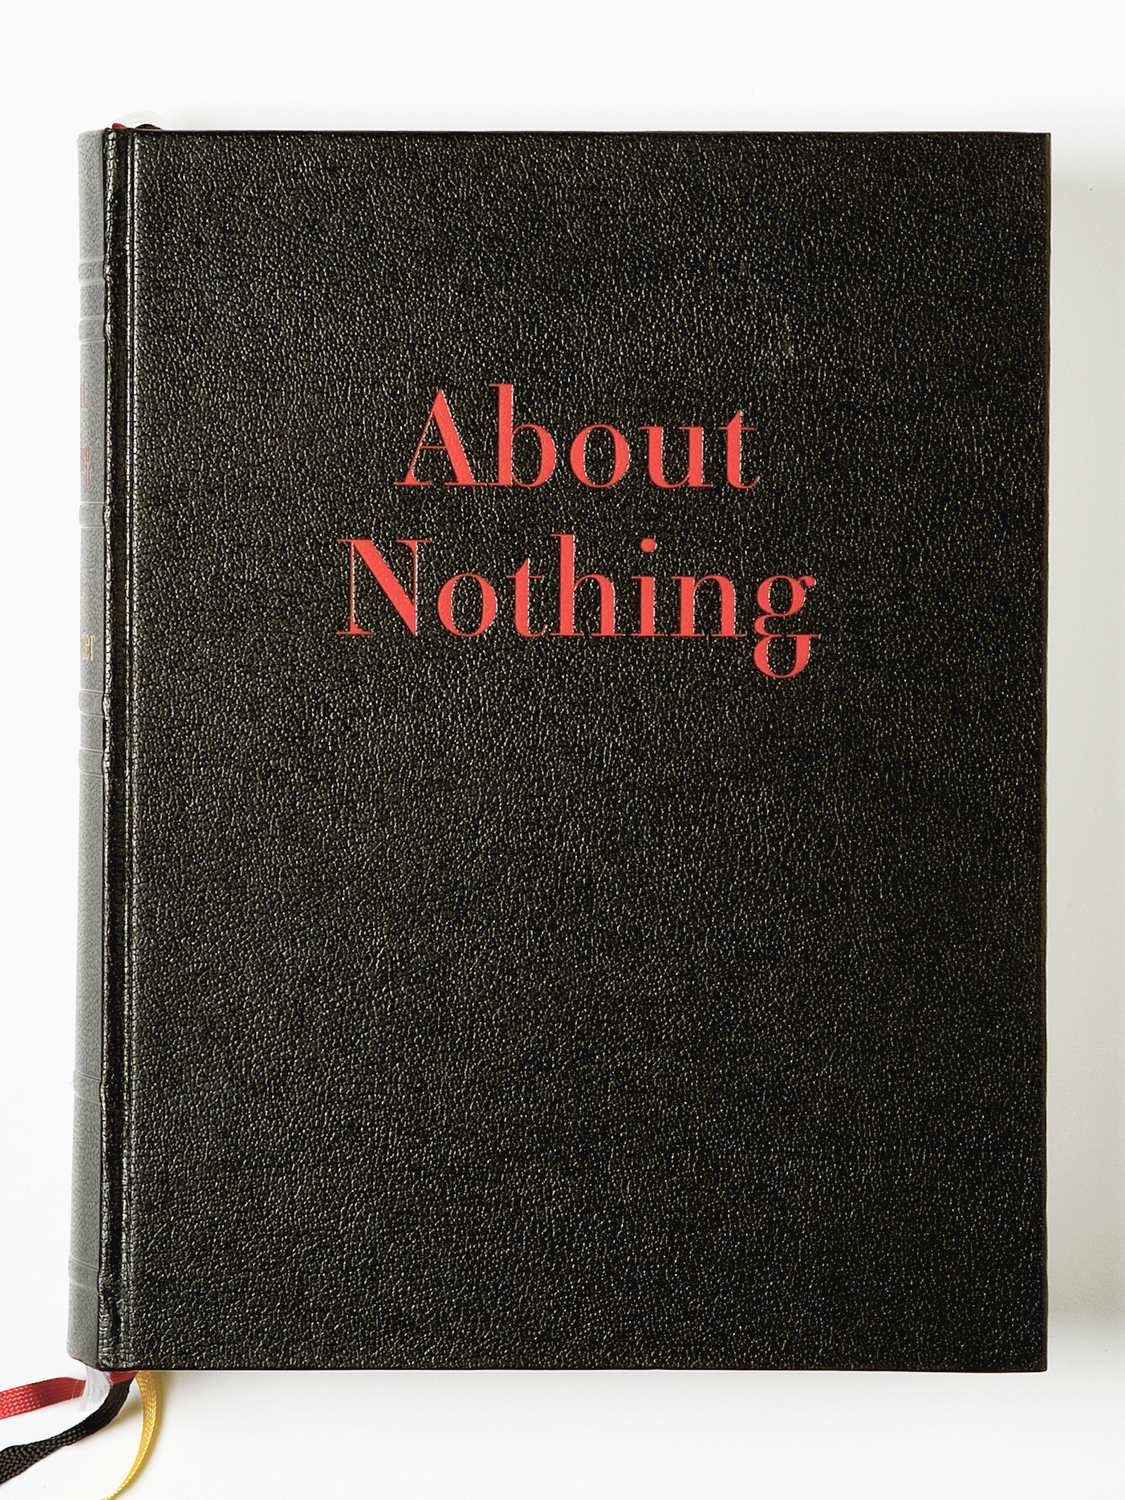 'John Armleder: About Nothing'